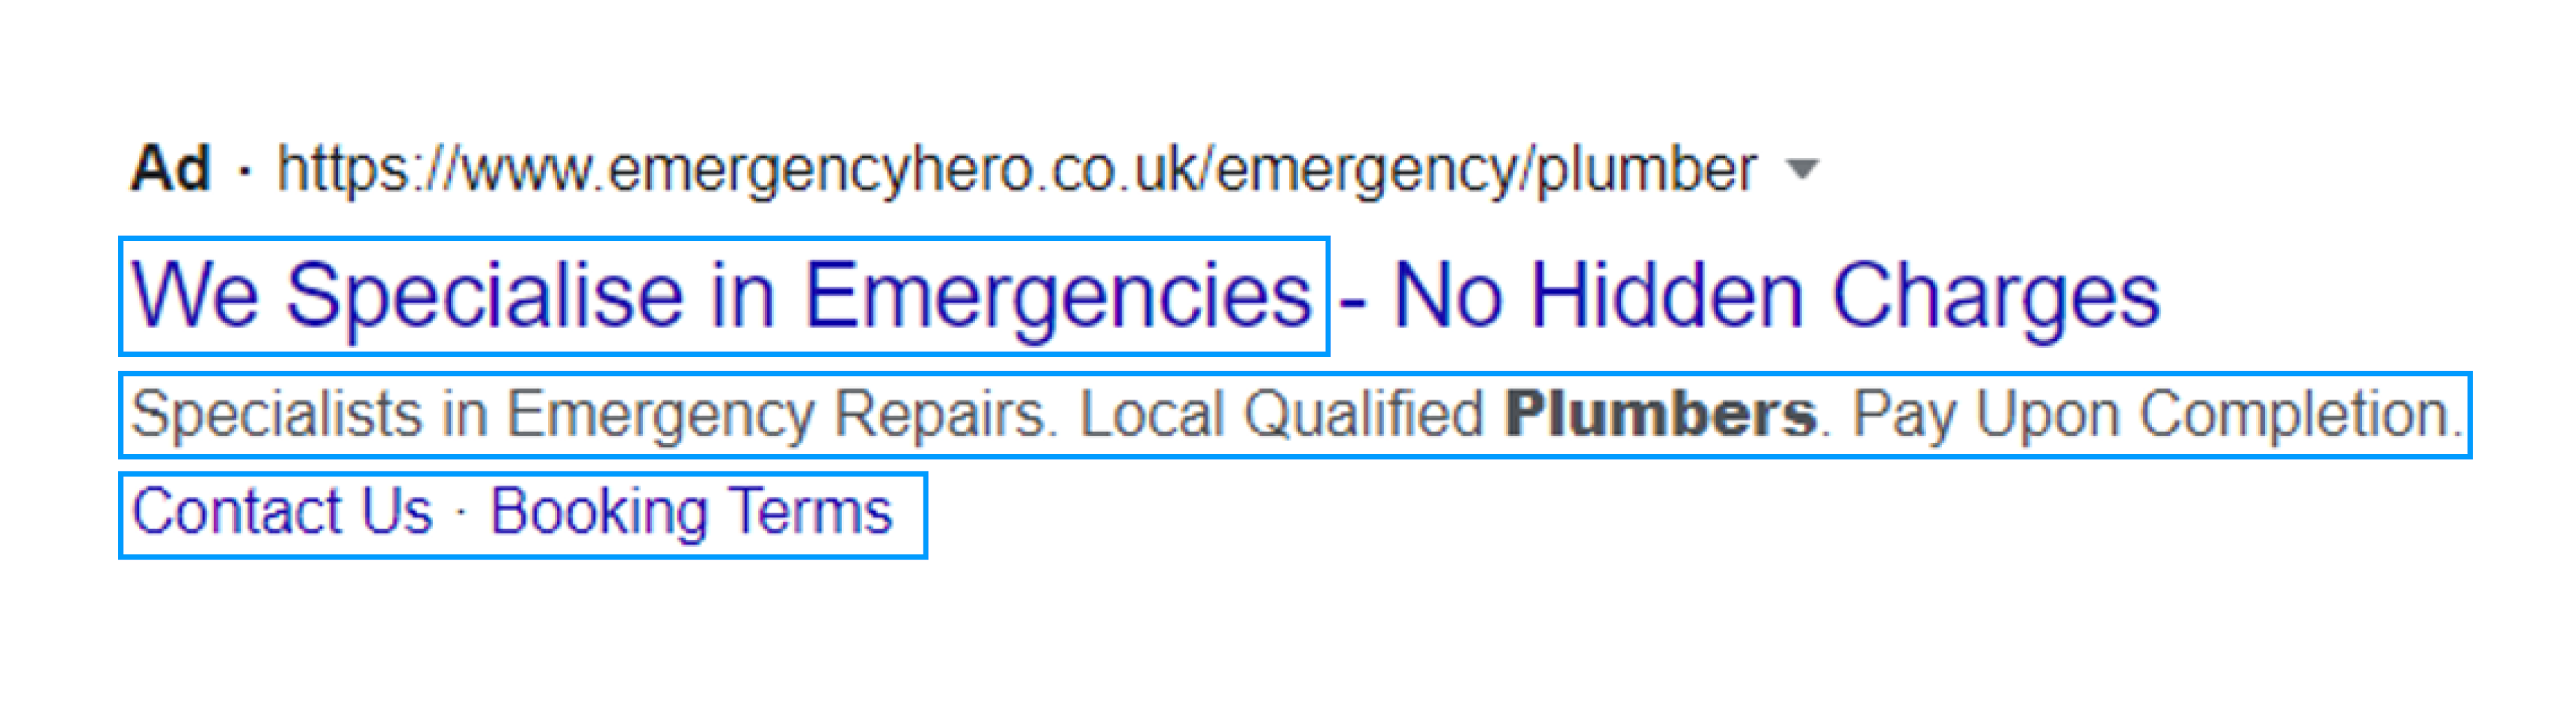 Screenshot of an Emergency Hero paid search advert